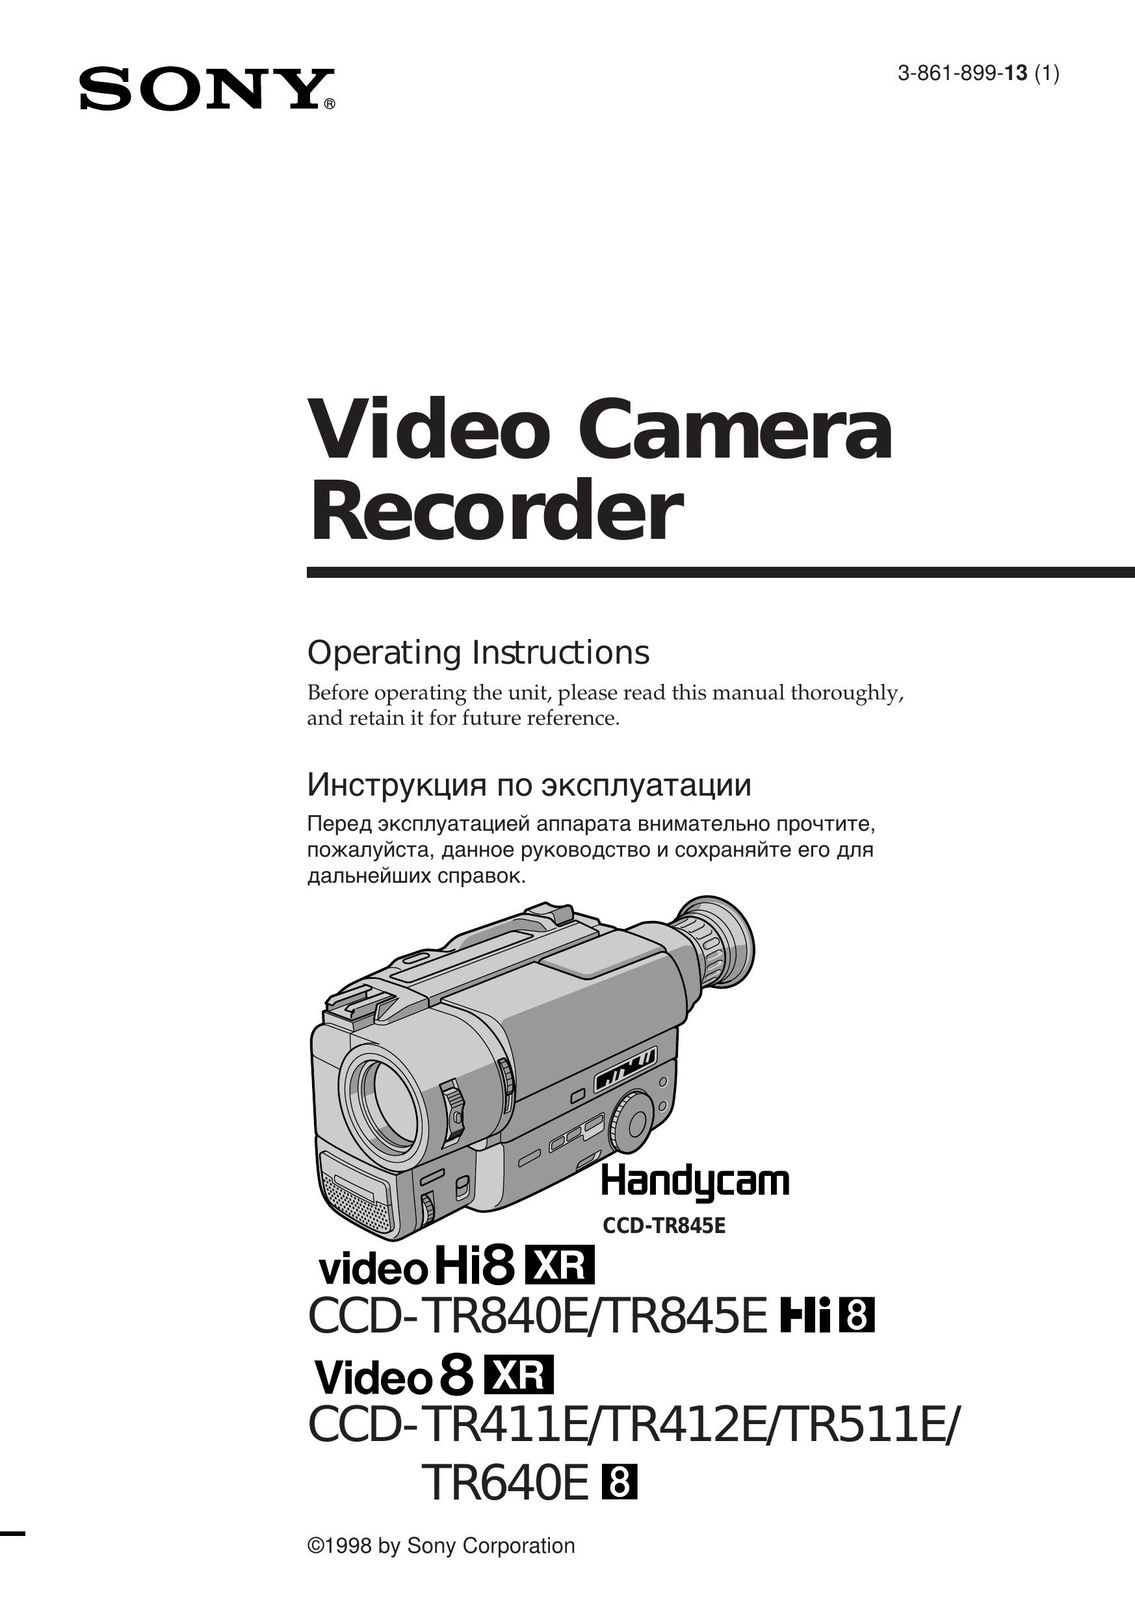 Sony CCD-TR412E VCR User Manual